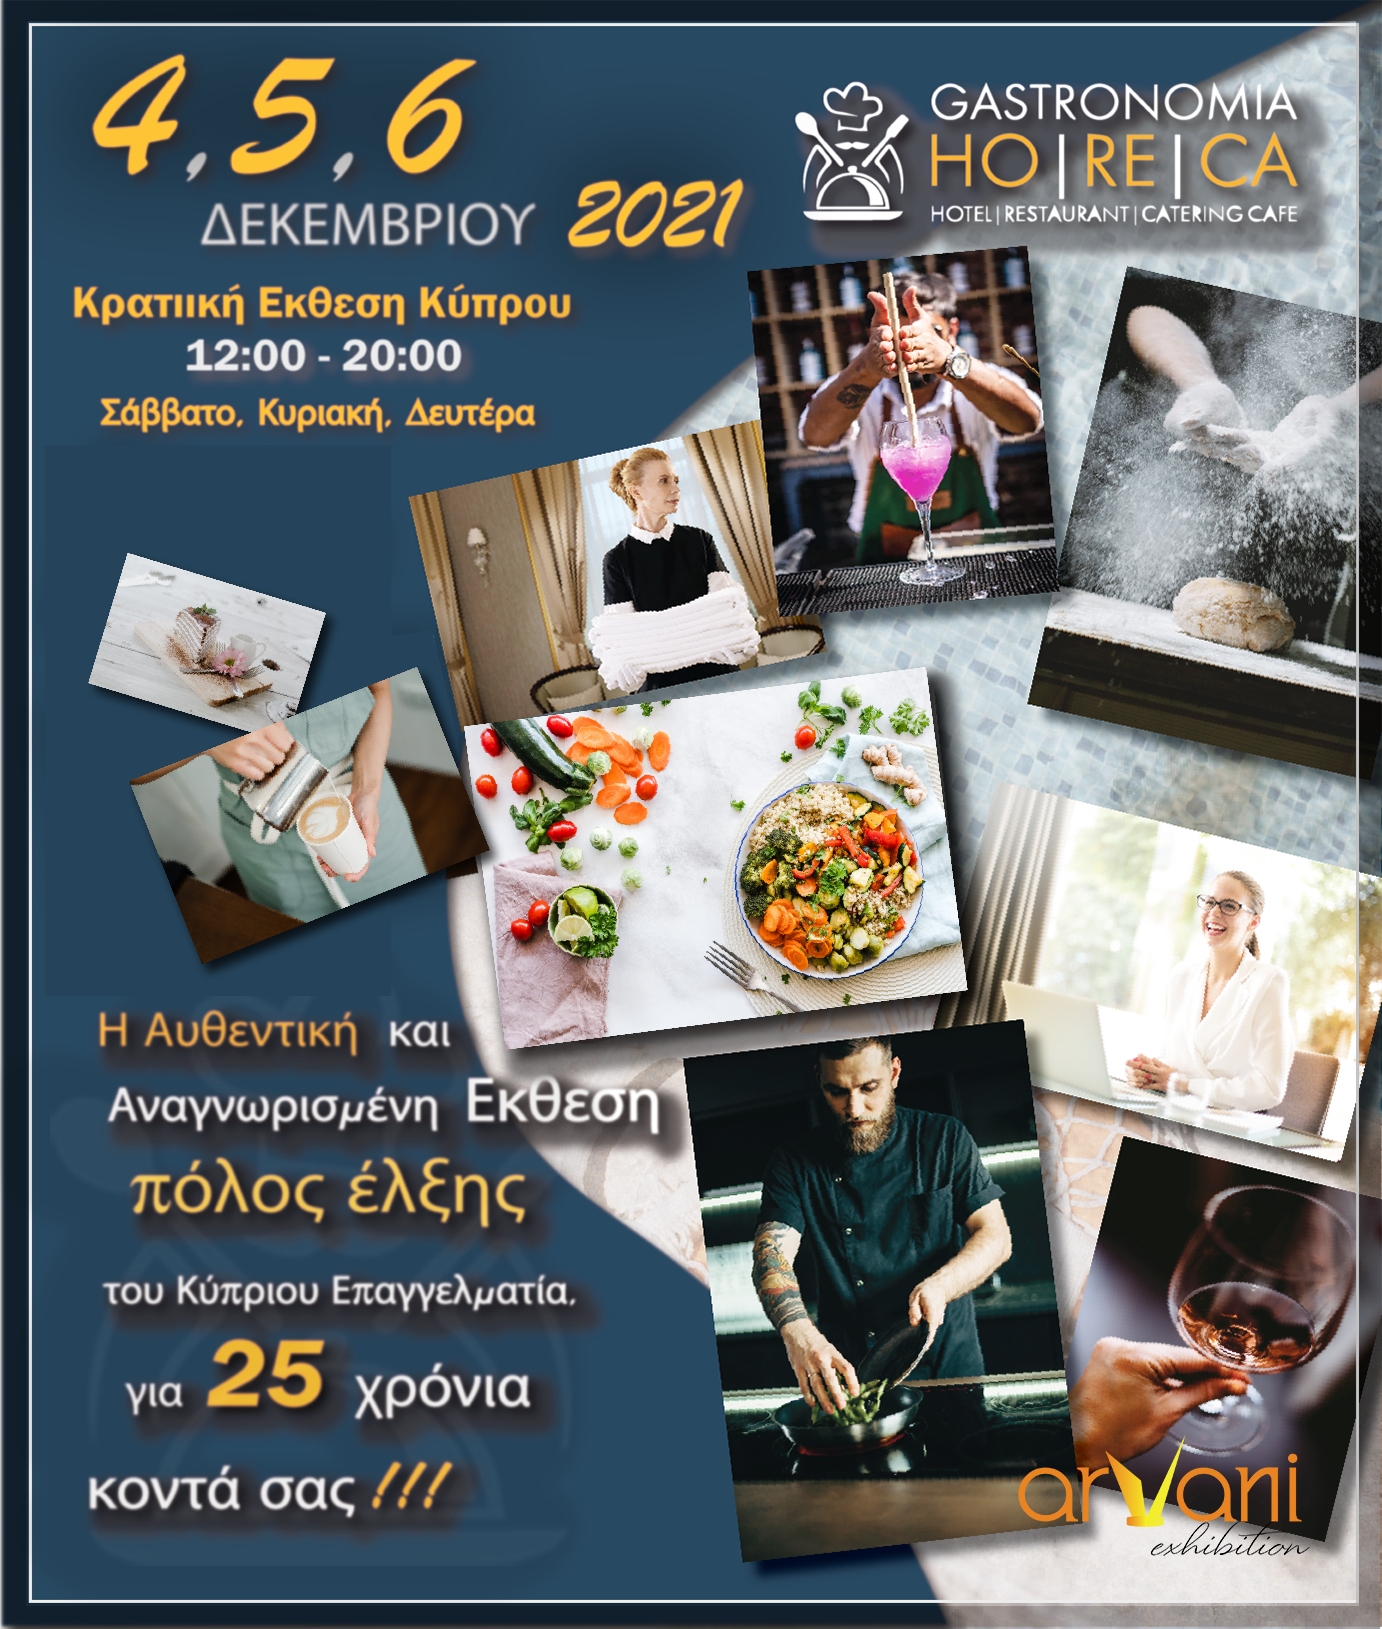 Gastronomia Horeca 2021 Image